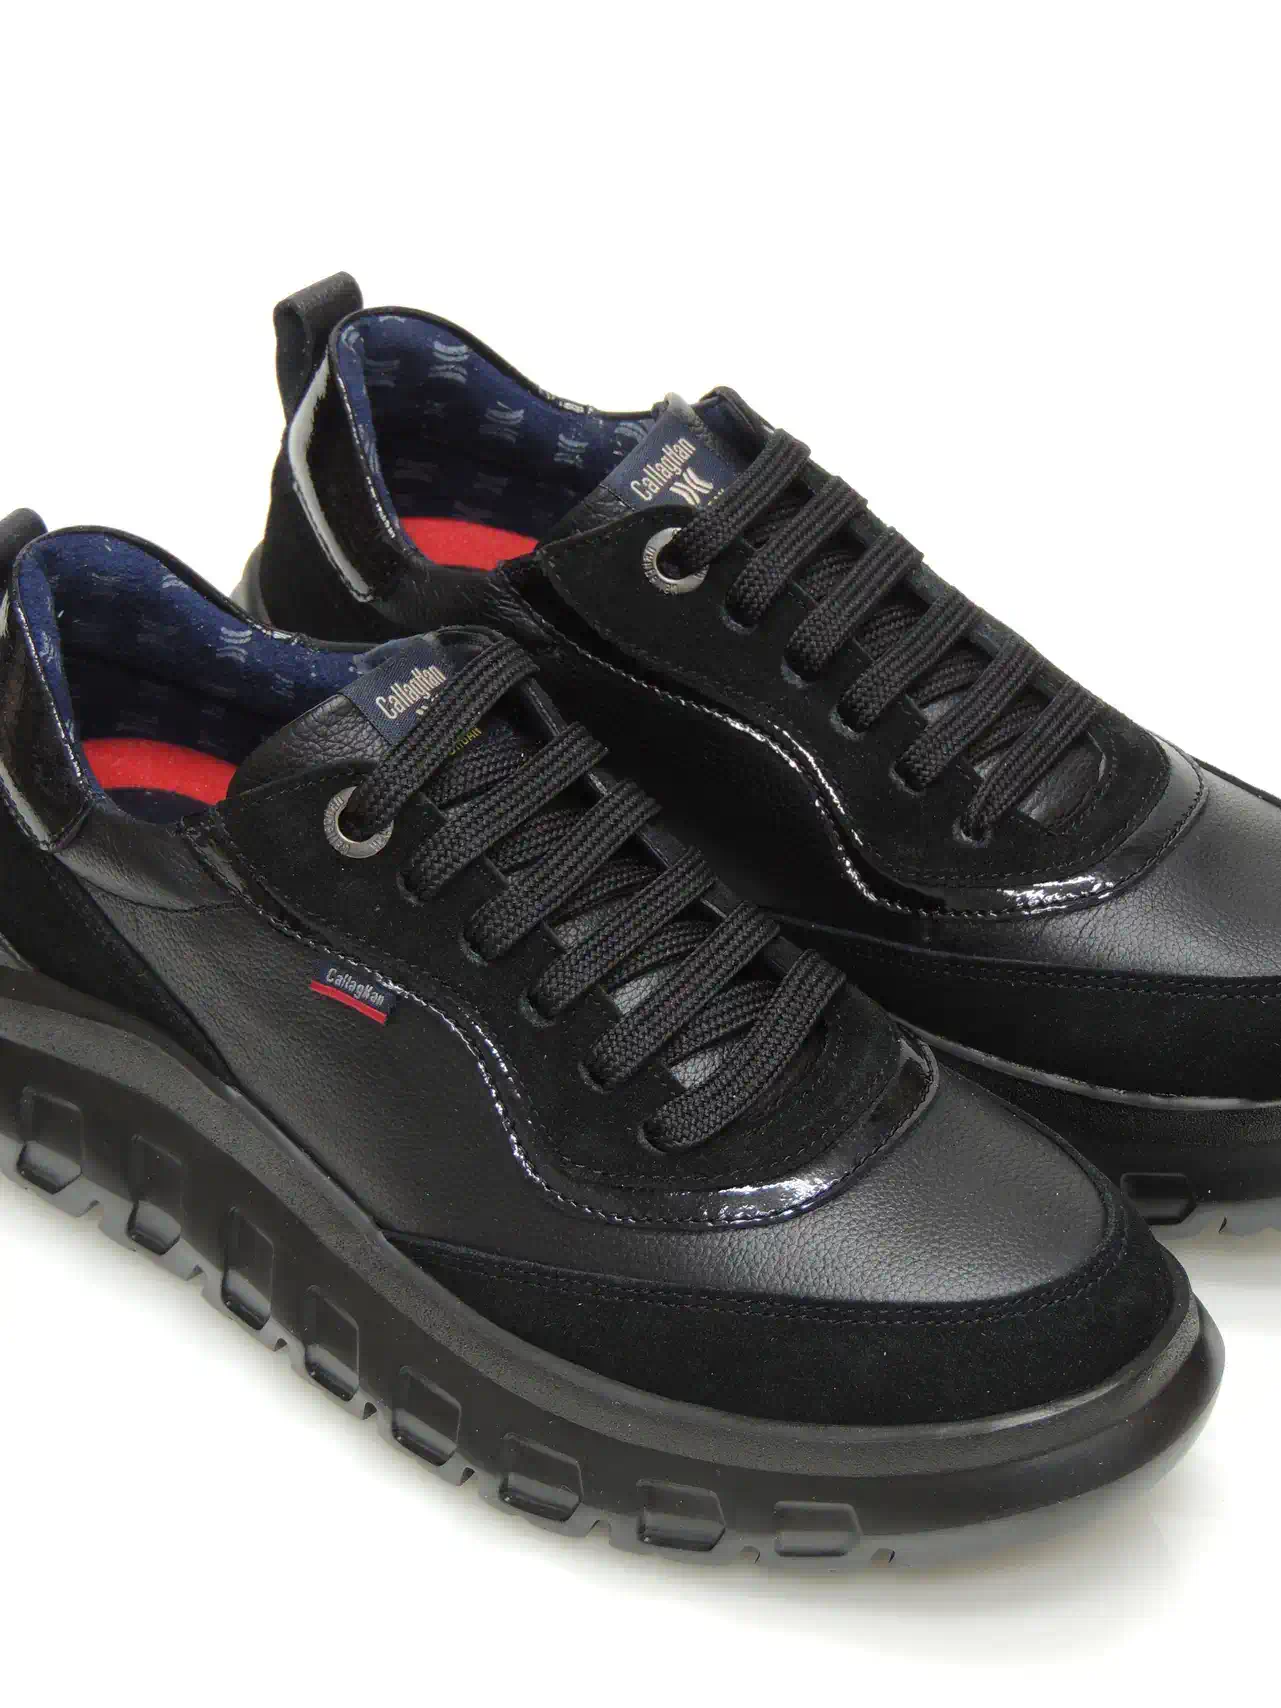 sneakers--callaghan-56000-piel-negro